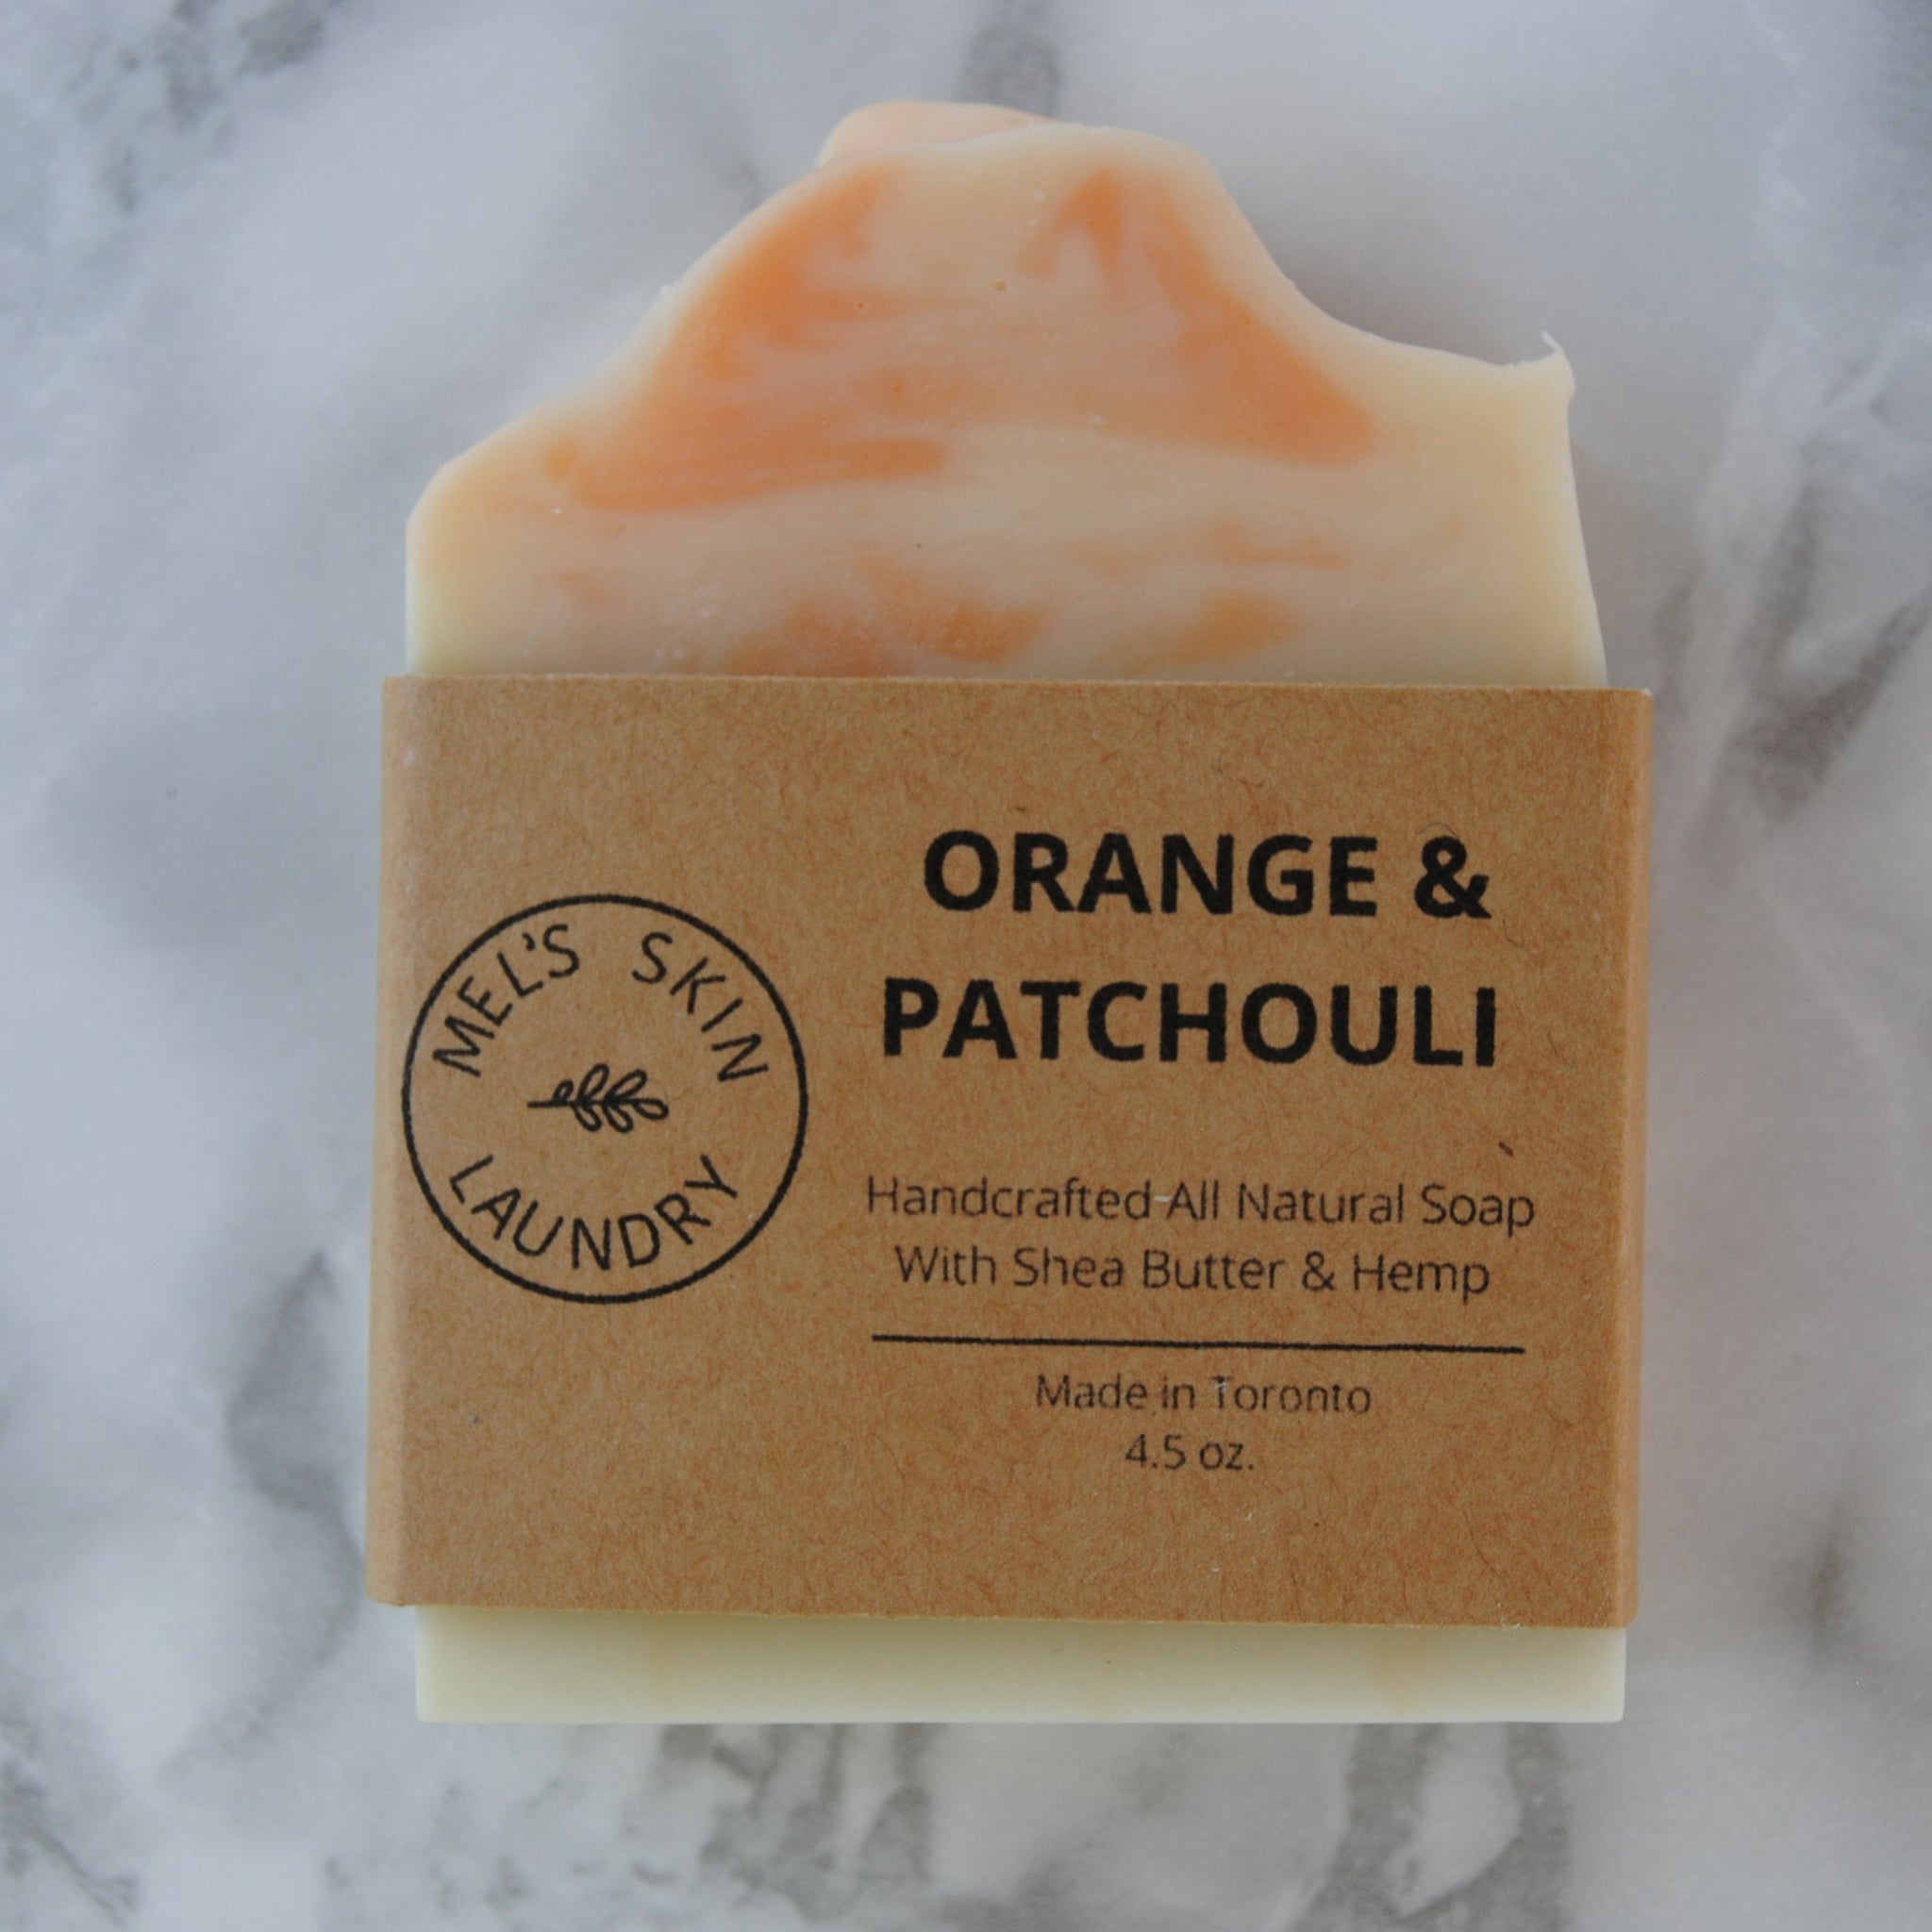 Orange & Patchouli Hemp Body Soap